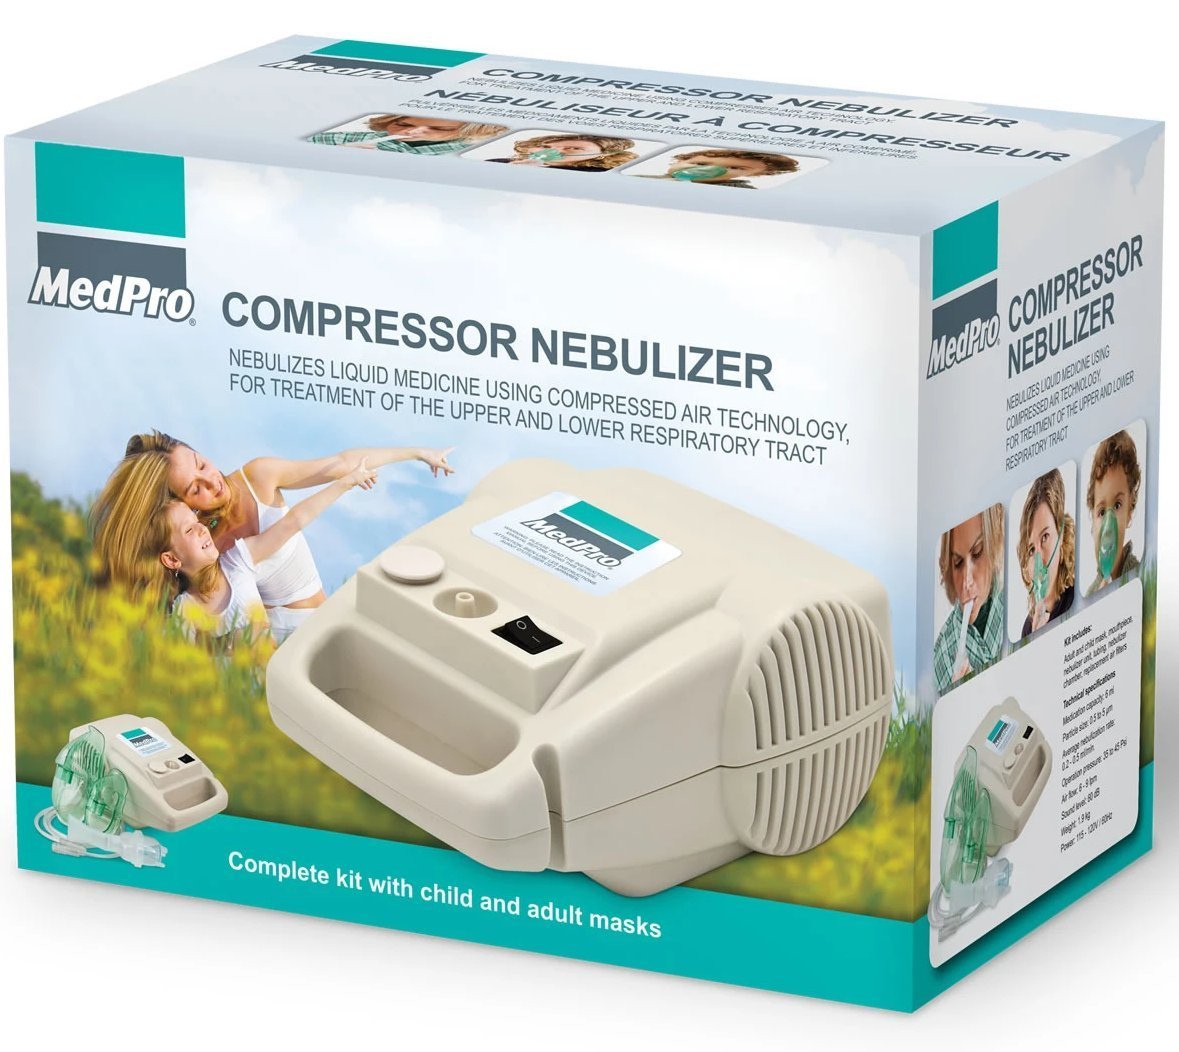 MedPro Compressor Nebulizer, MyWellCare